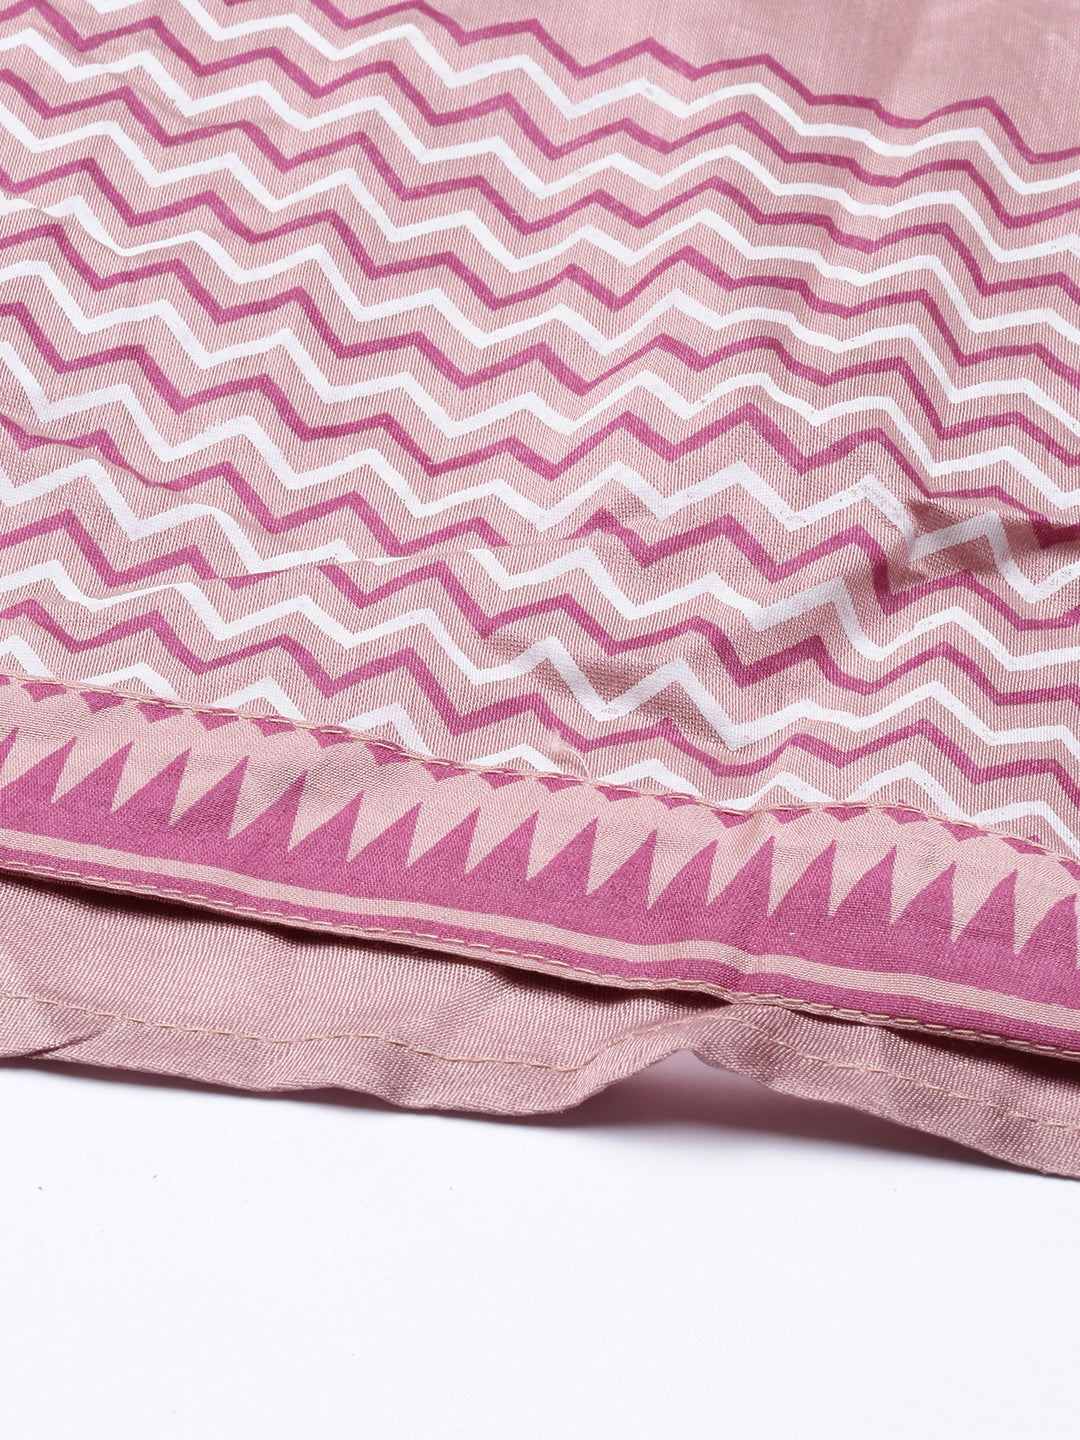 Neeru's Pink Color Chanderi Fabric Kurta Set